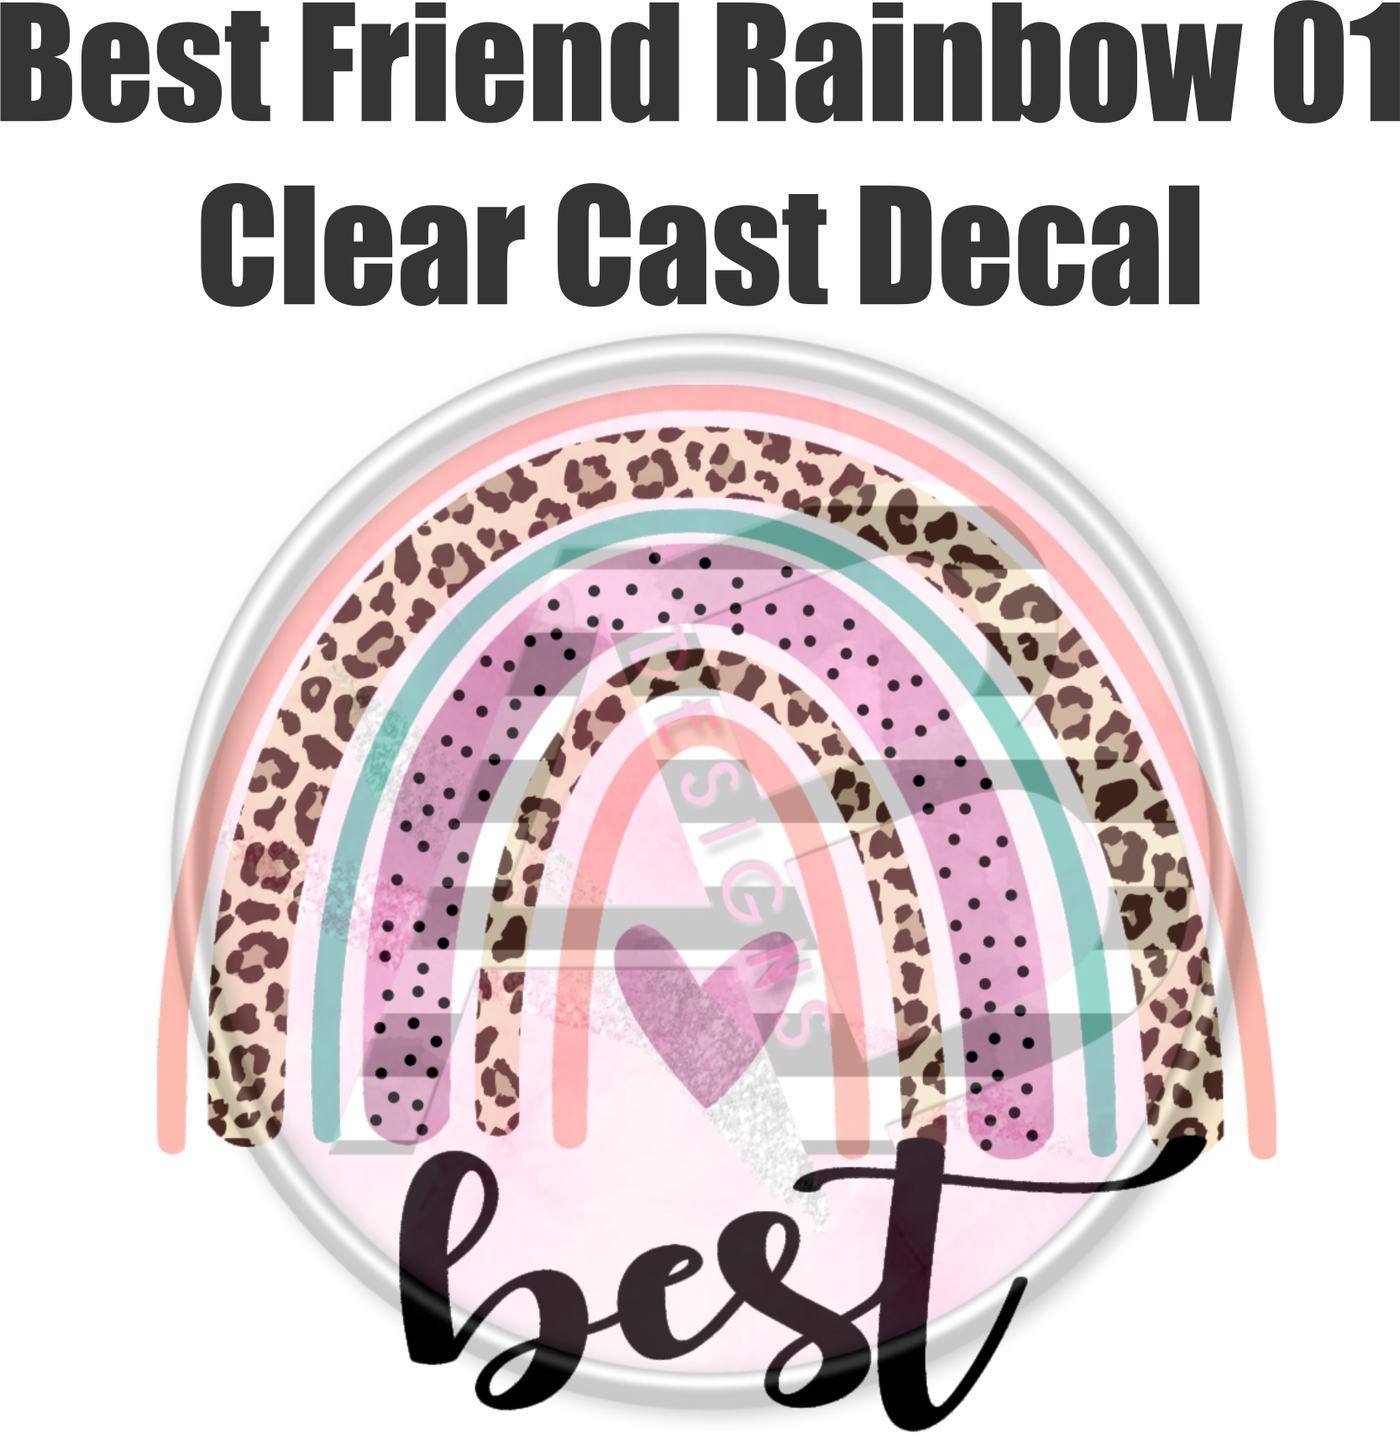 Best Friend Rainbow 01 - Clear Cast Decal